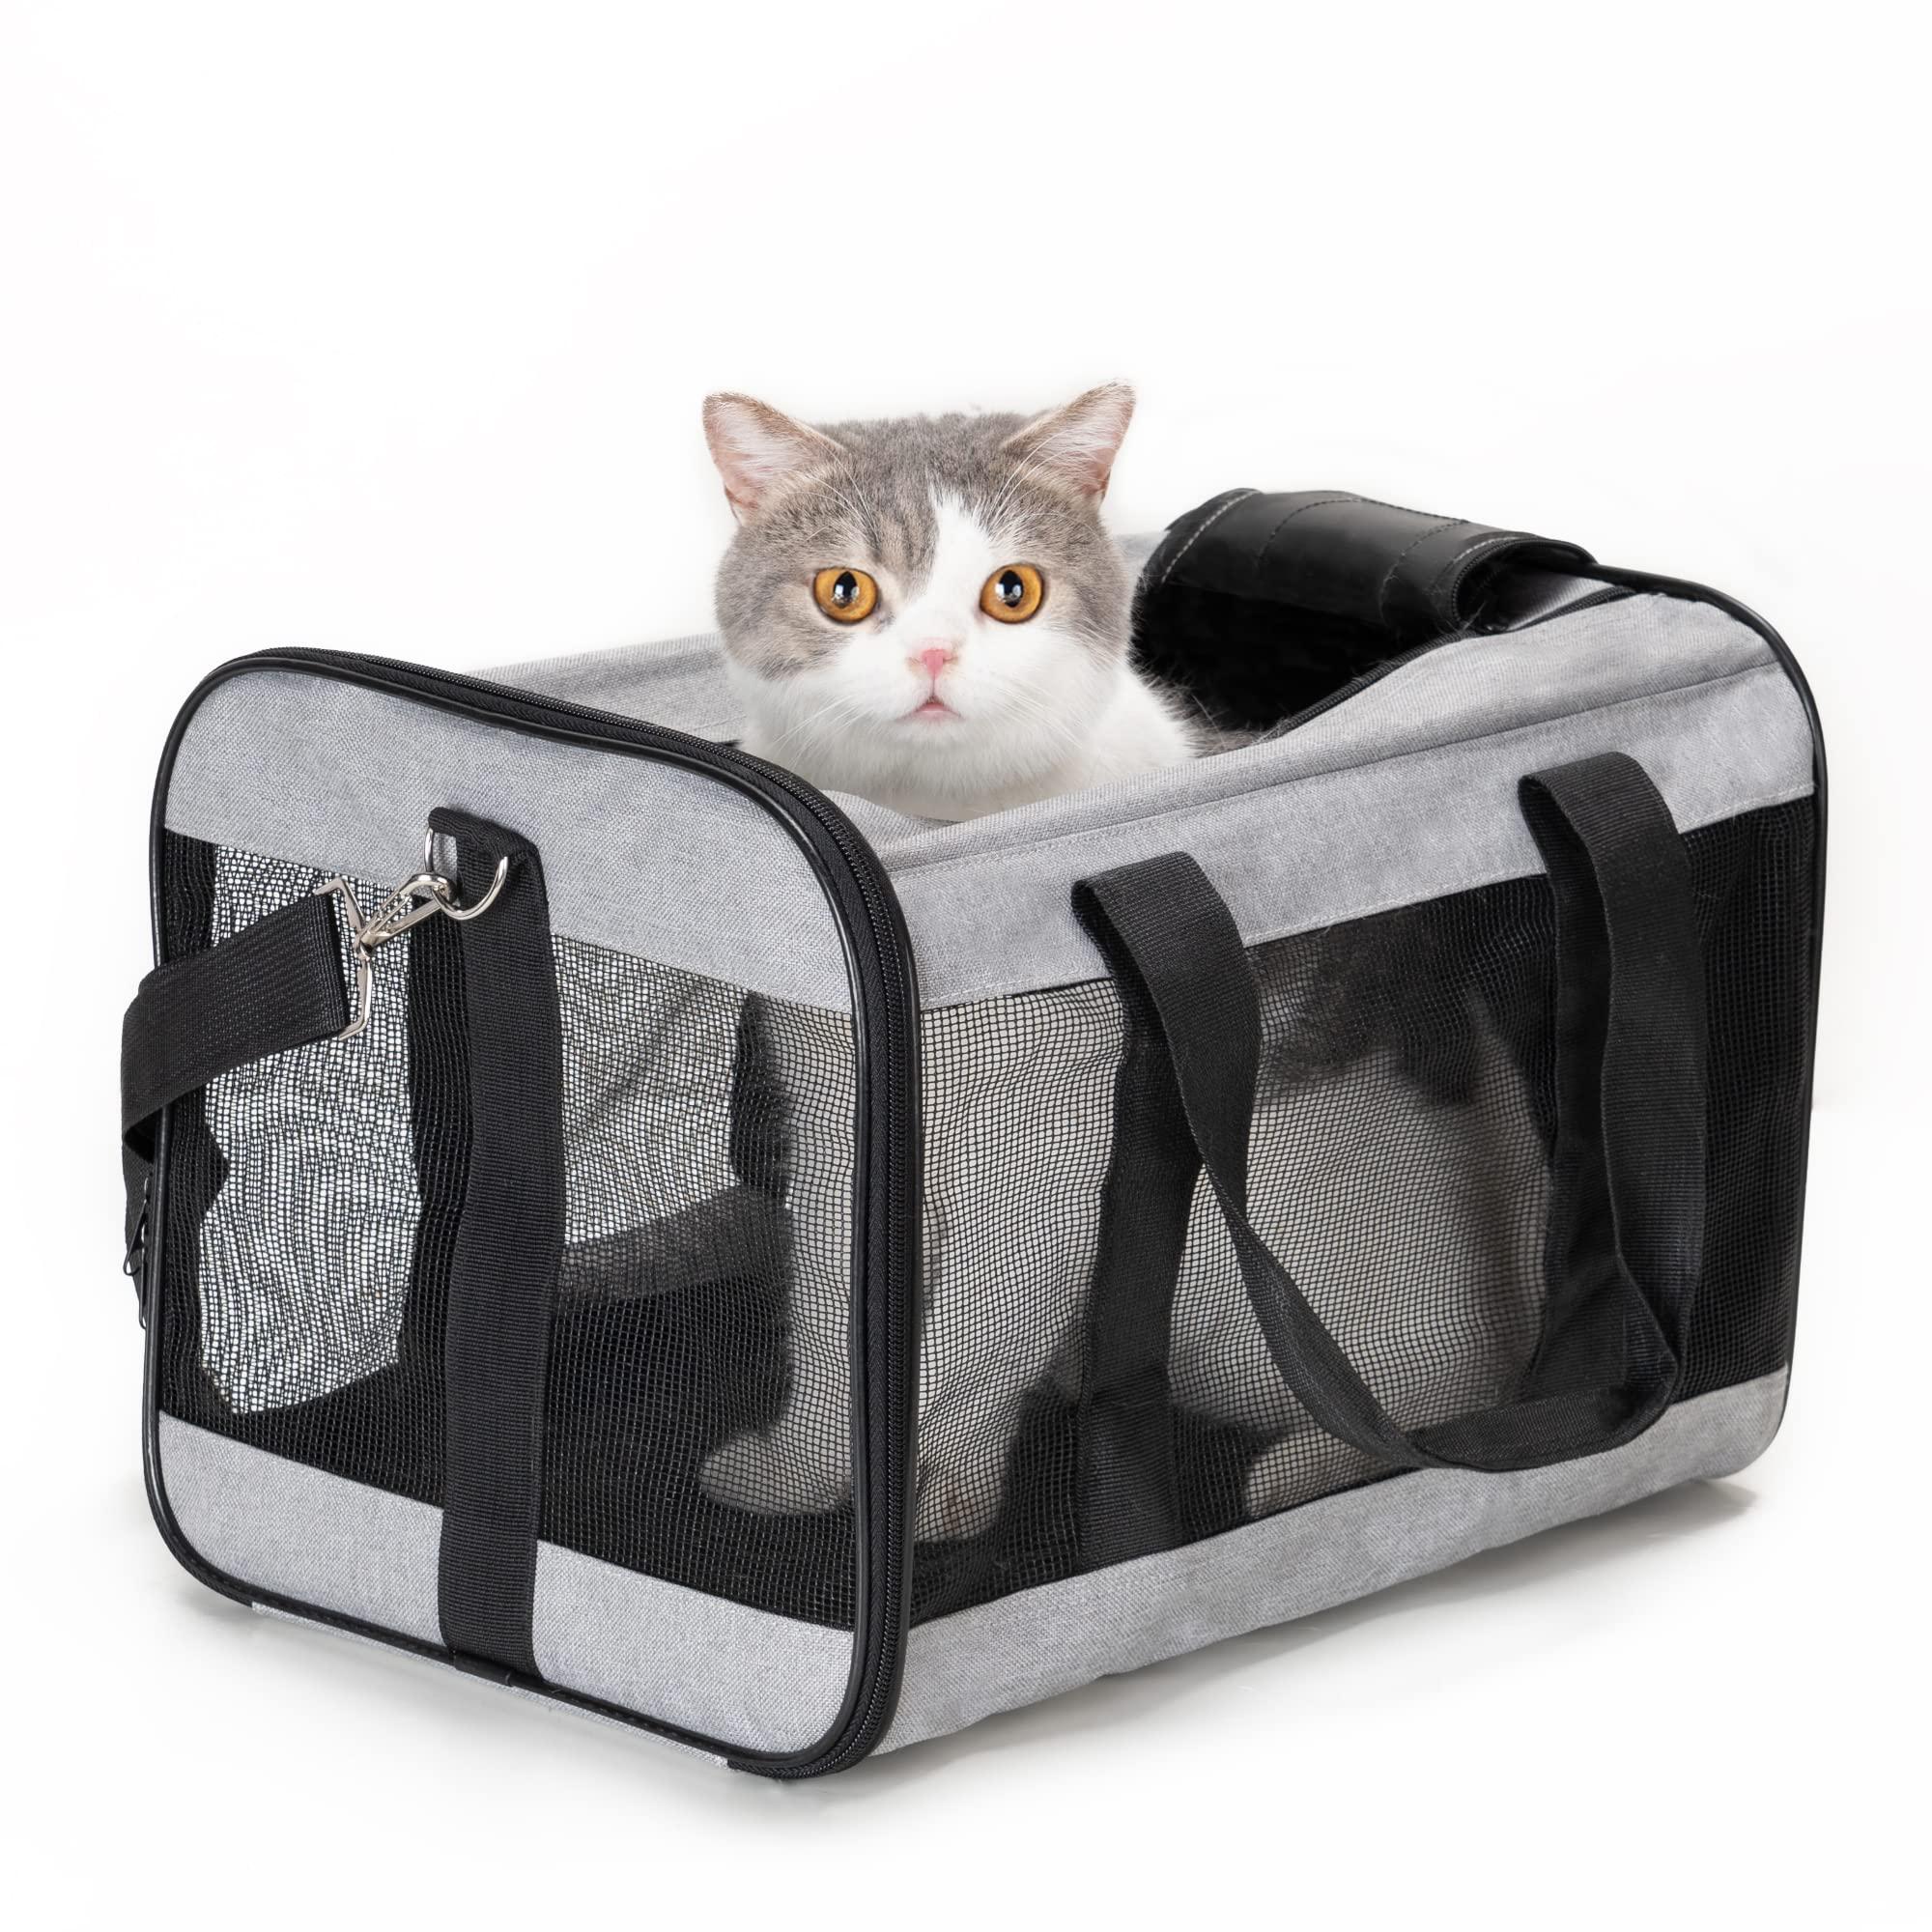 HITSLAM Pet carrier cat carrier Medium gray